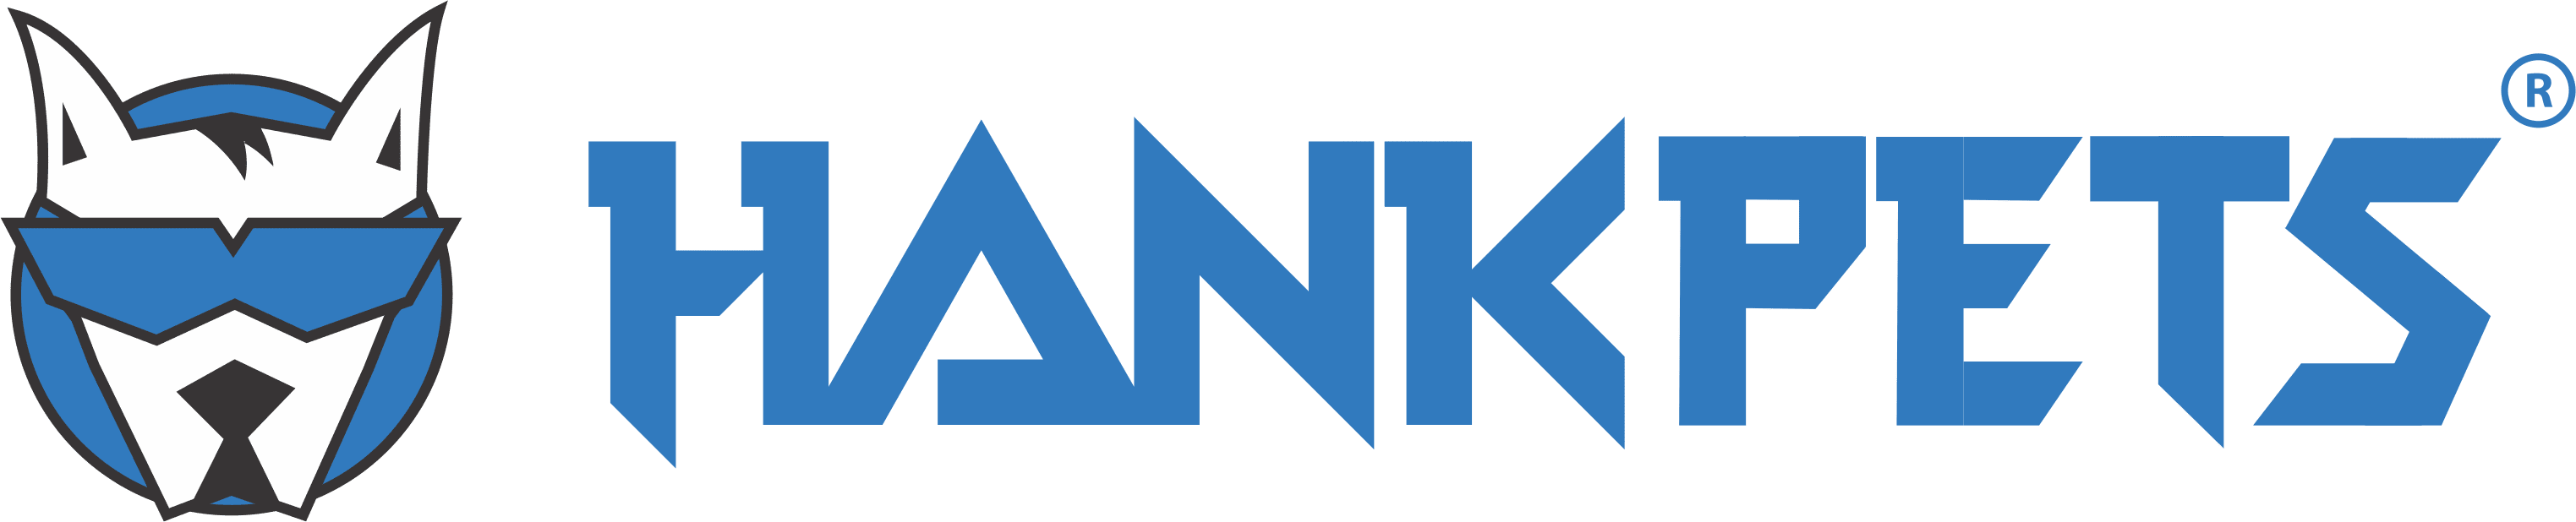 hank-logo-4